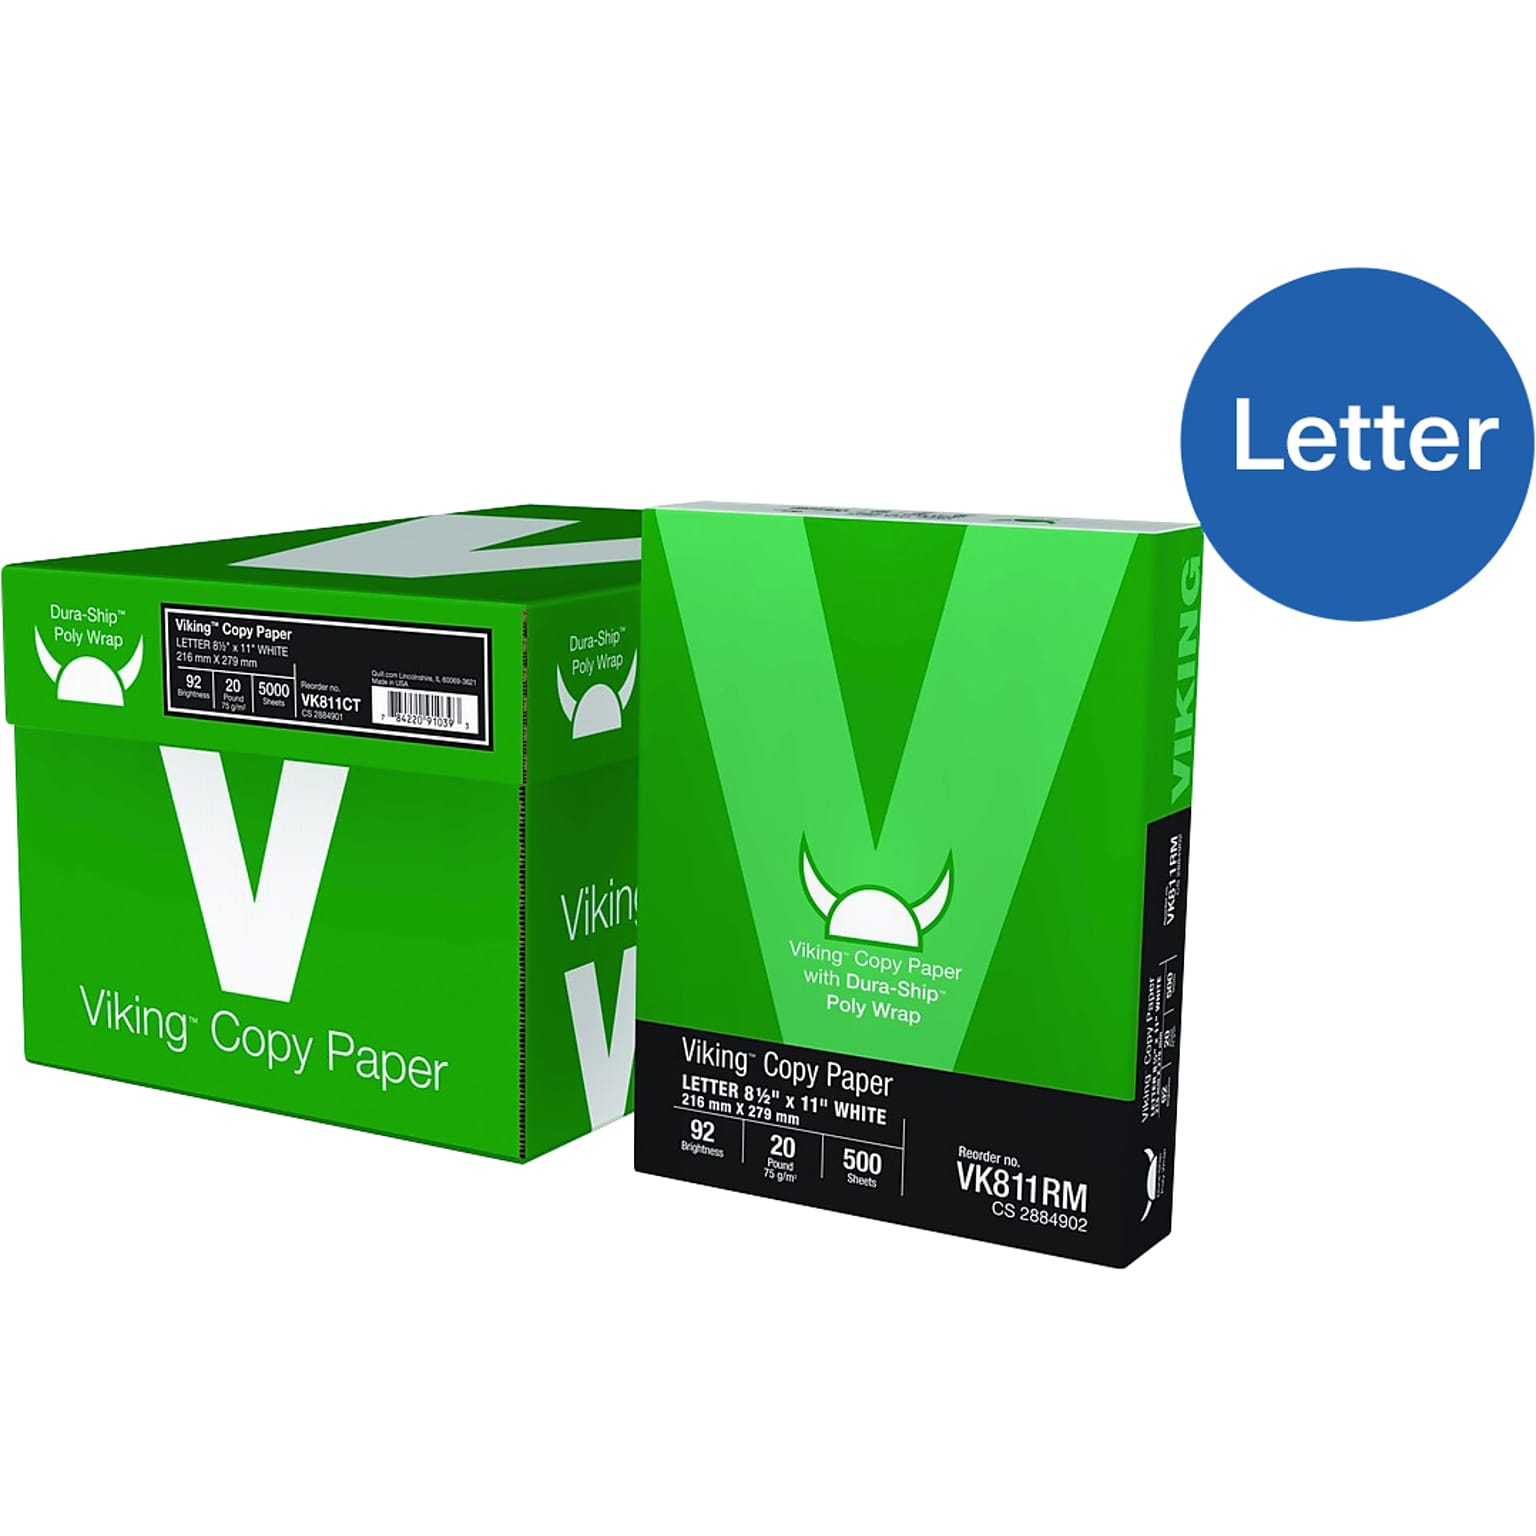 Dura-Ship™ Viking™ 8.5 x 11 Poly Wrap Copy Paper, 20 lbs., 92 Brightness, 5000 Sheets/Carton (VK811CT)